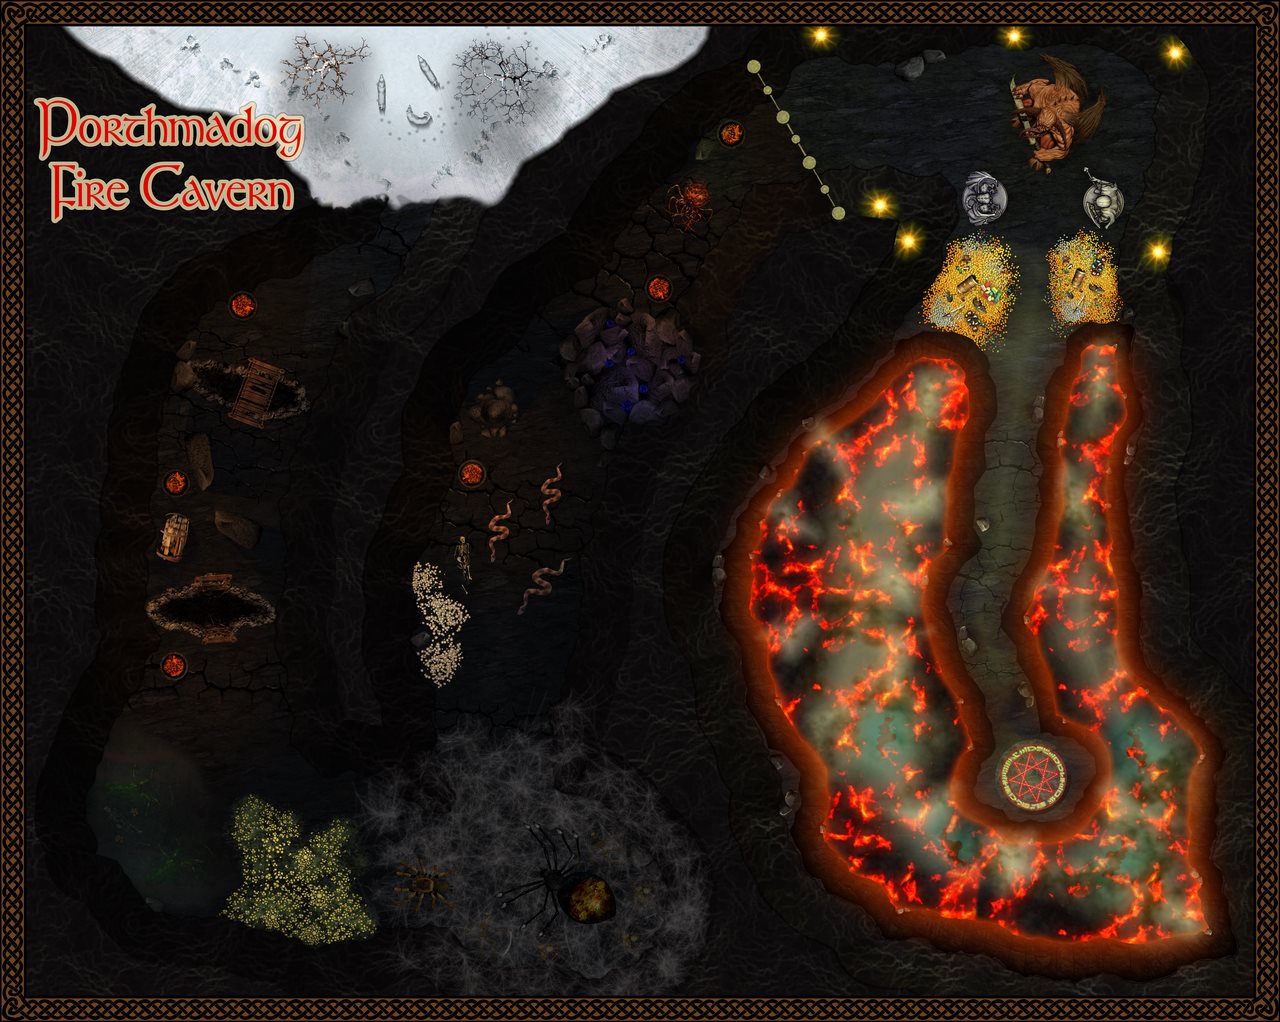 Nibirum Map: porthmadog fire cavern by Philip Hughes